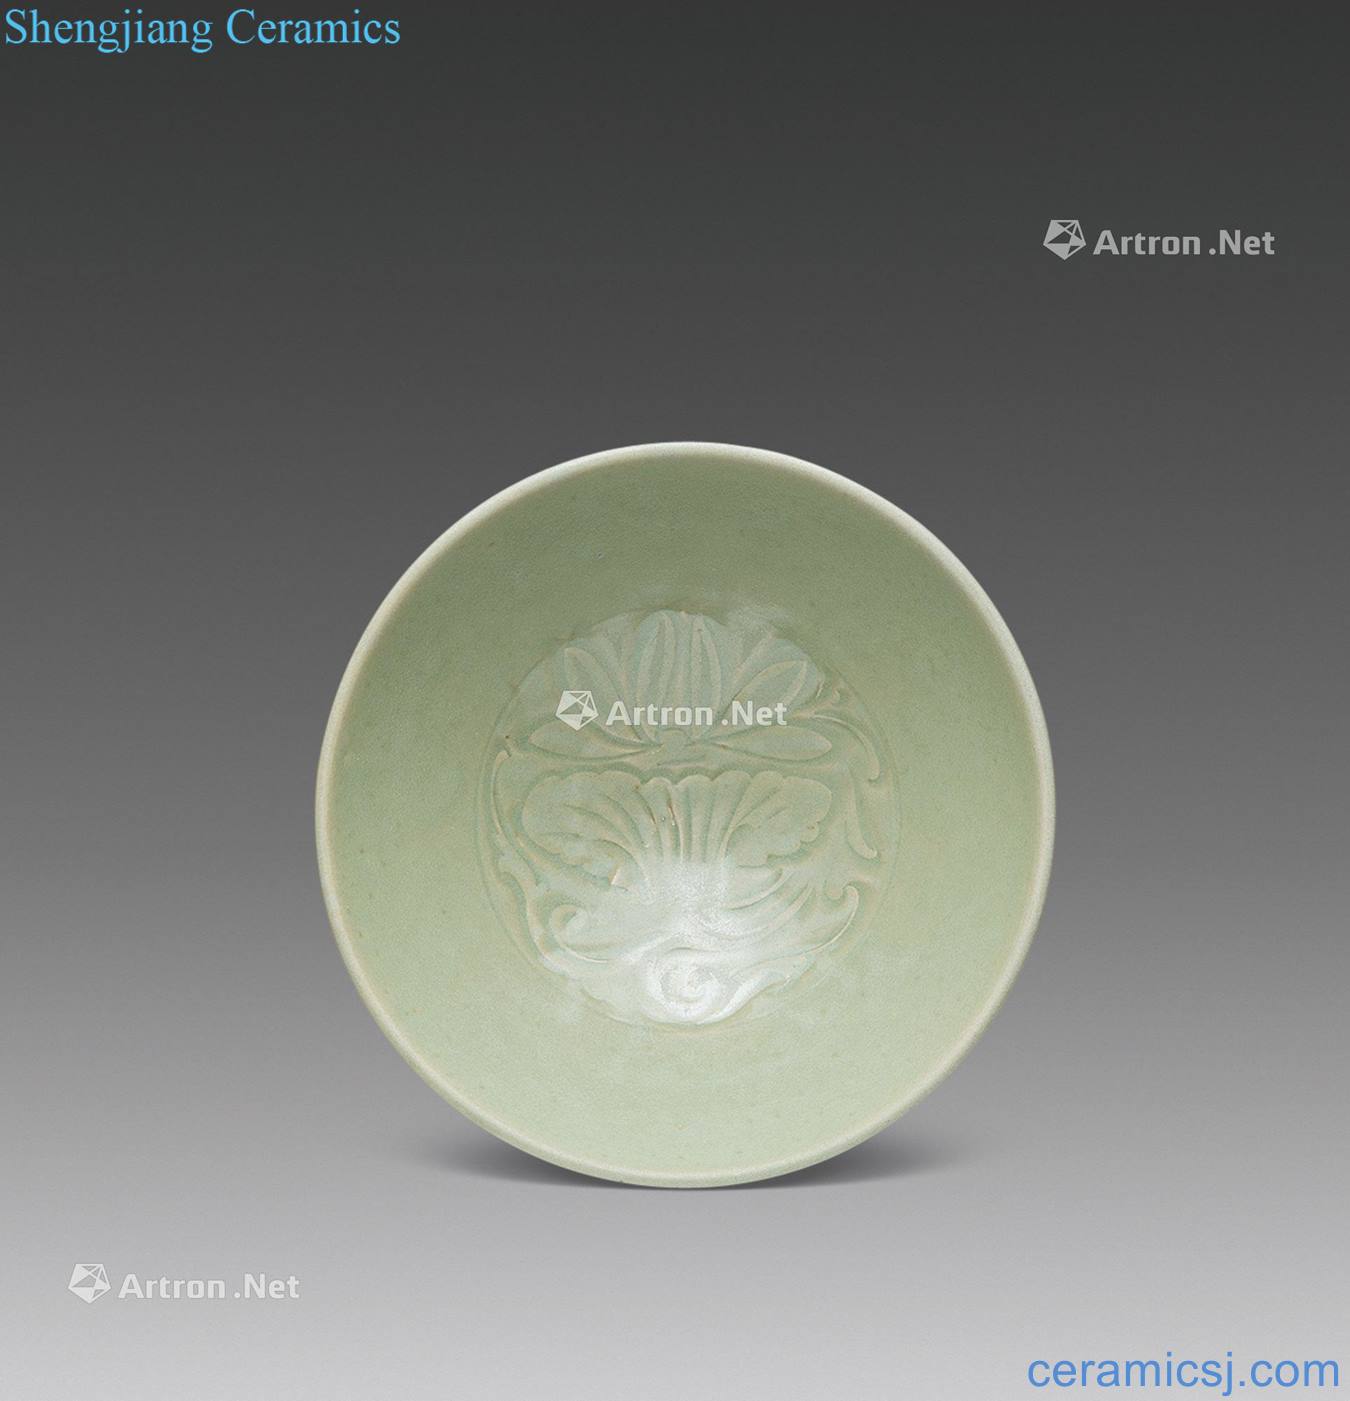 Jin yao dark state kiln carved flowers green-splashed bowls